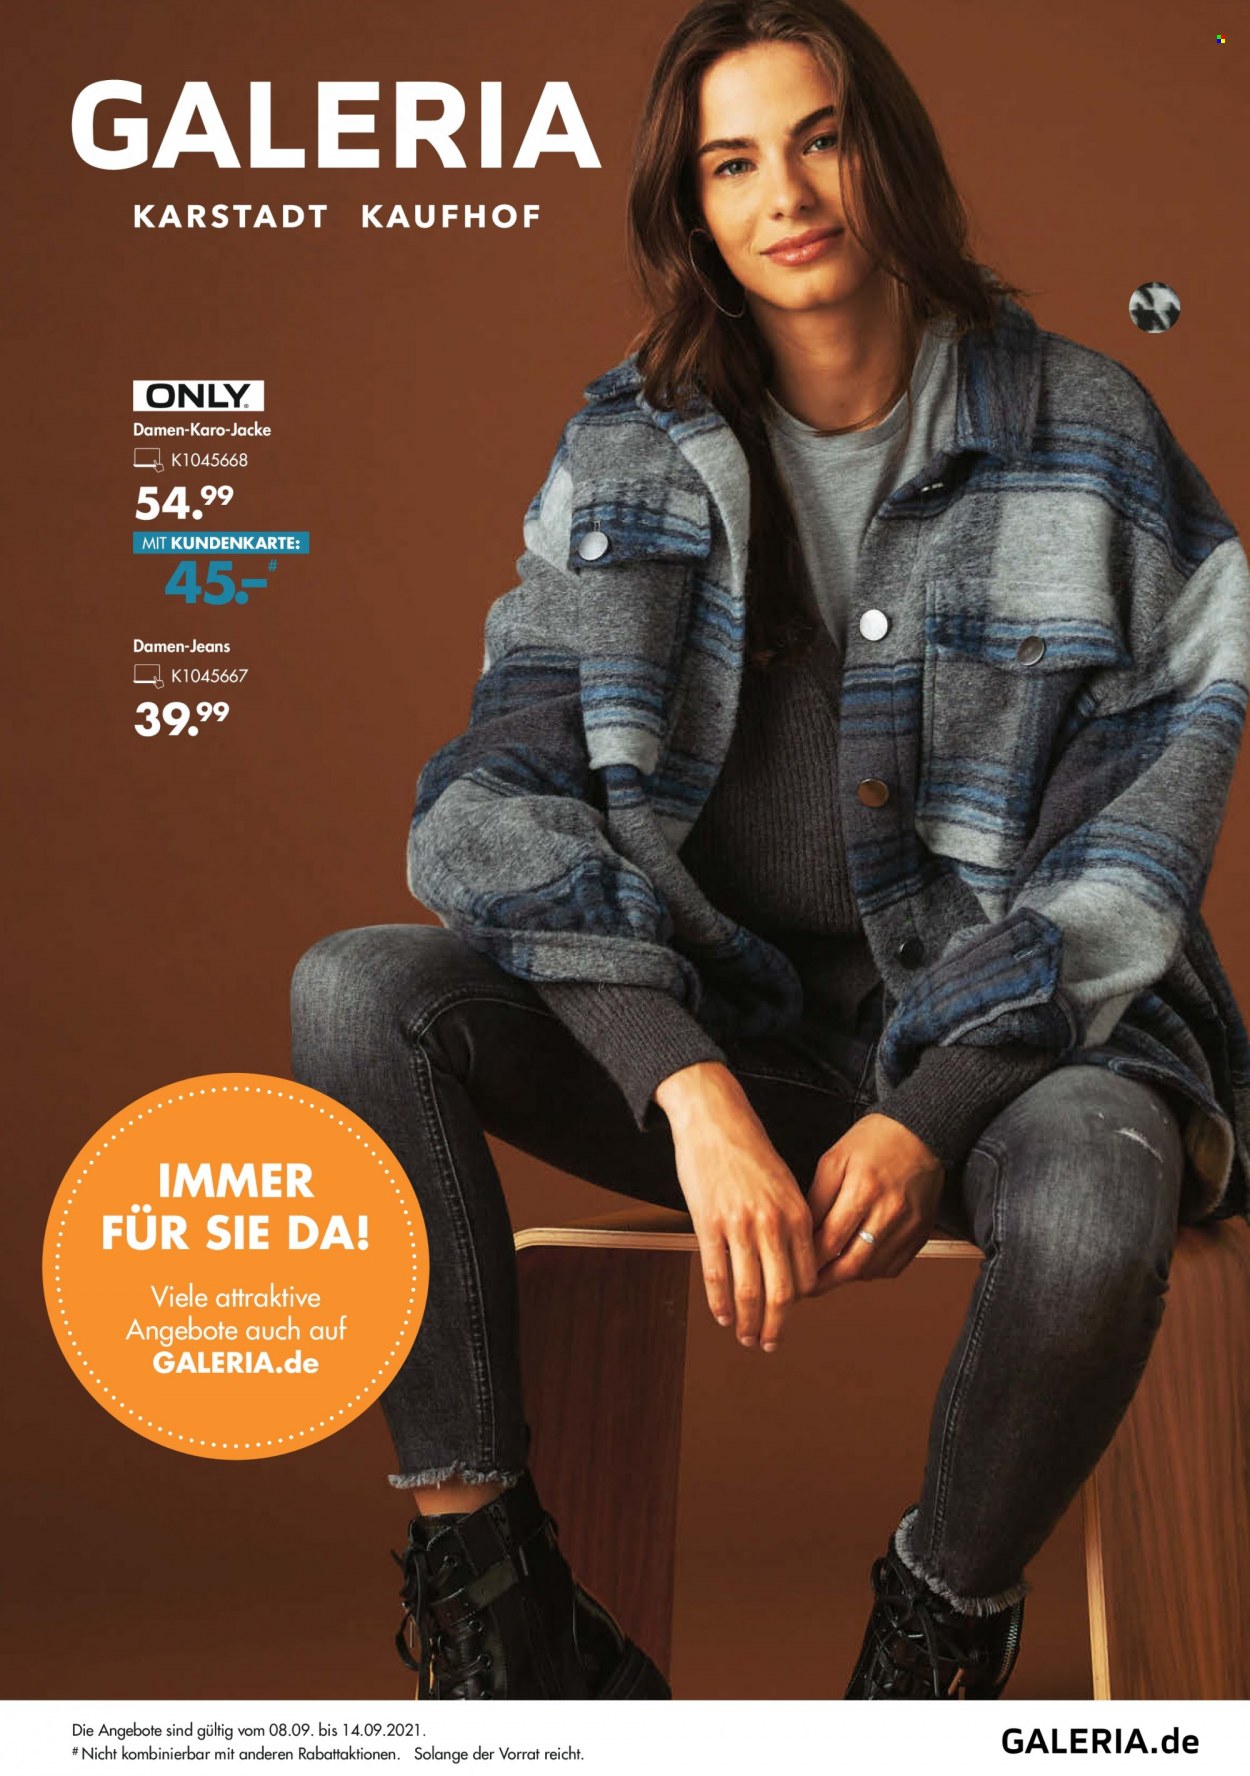 thumbnail - Prospekte GALERIA Karstadt Kaufhof - 8.09.2021 - 14.09.2021 - Produkte in Aktion - Jacke, Jeans. Seite 1.